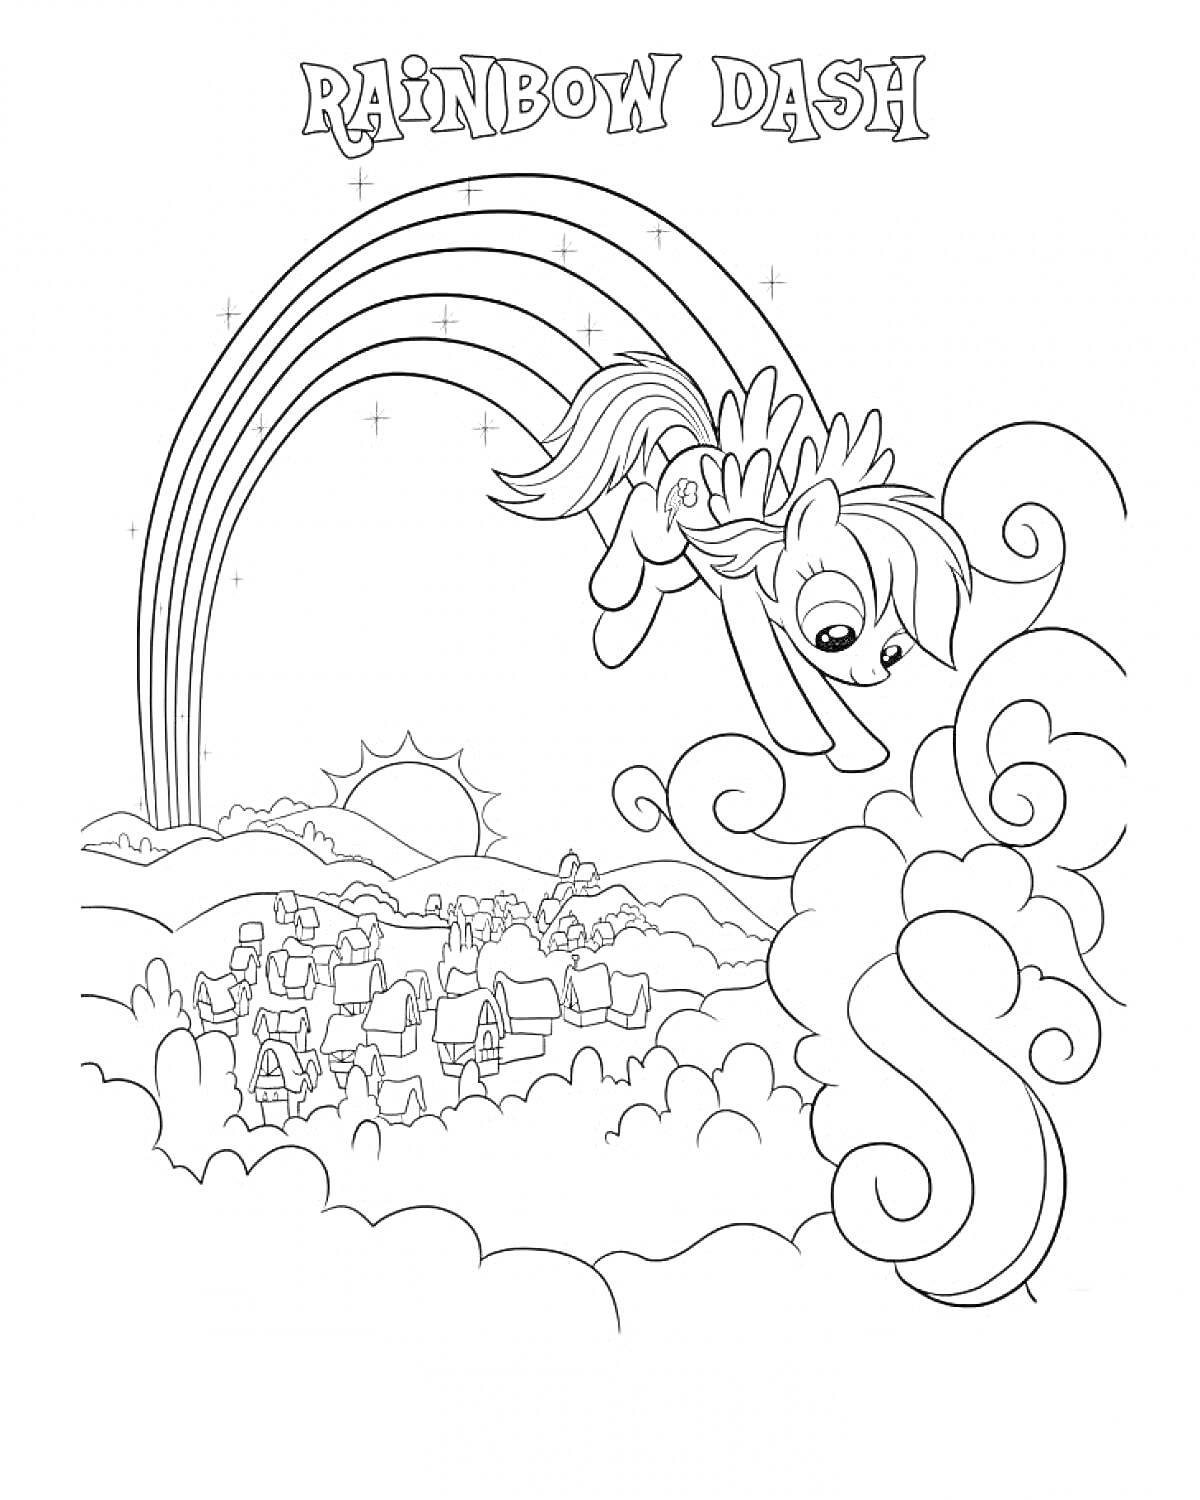 Раскраска Рейнбоу Дэш летит через облака на фоне радуги с видом города и восходящего солнца